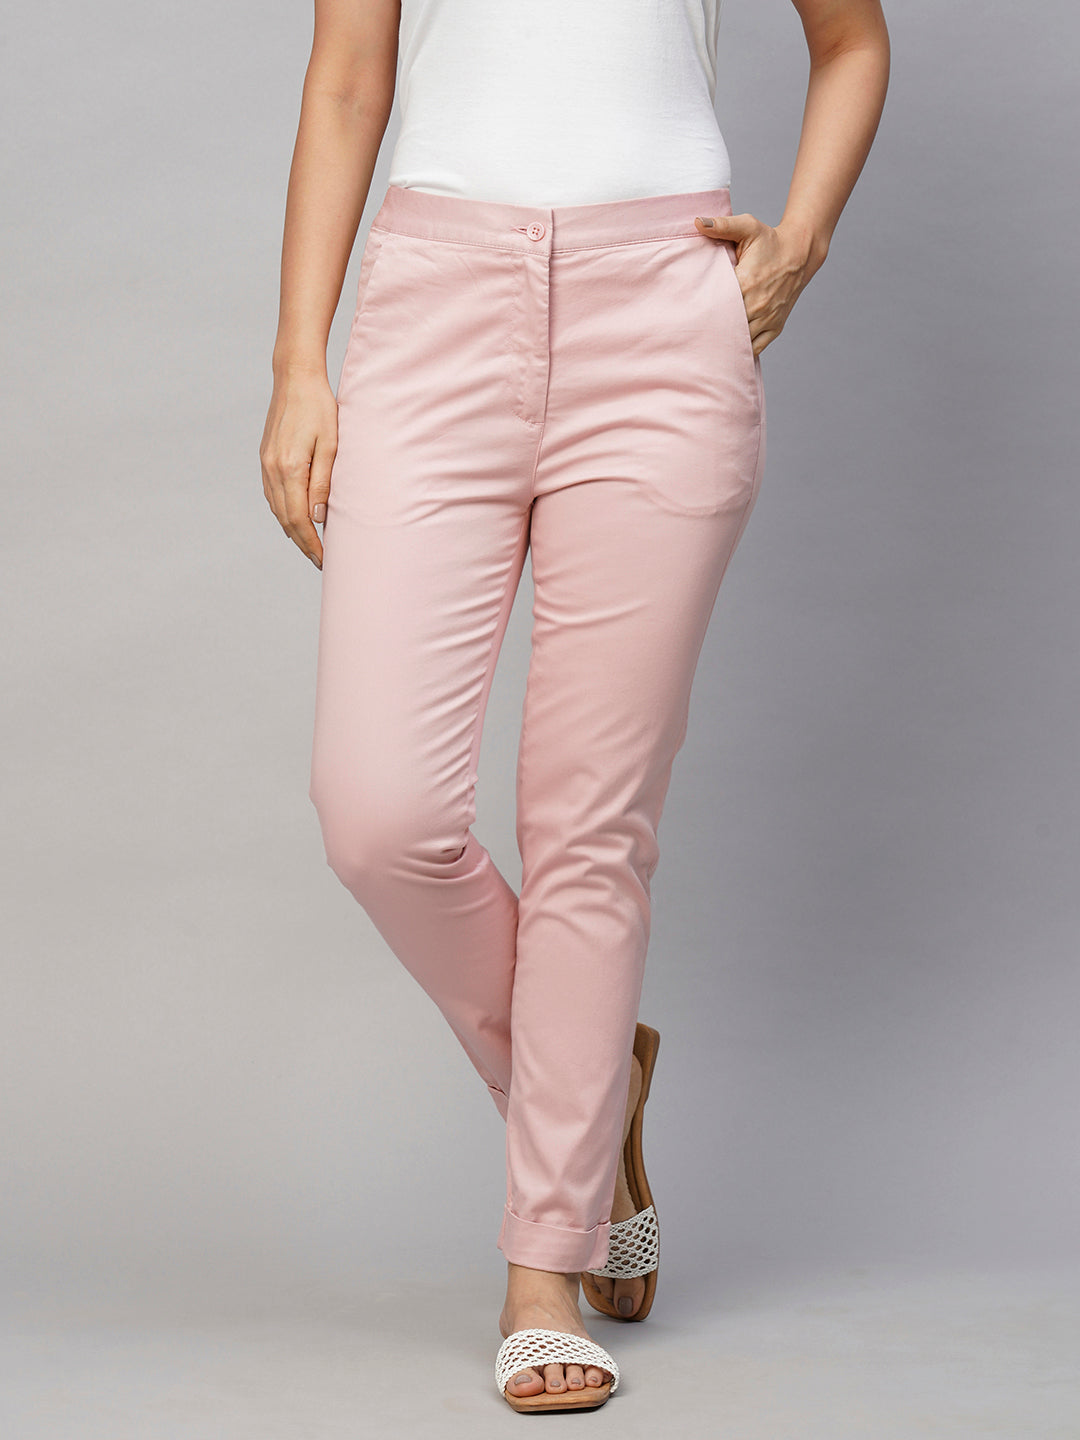 Women's Pink Cotton Lycra Slim Fit Pant